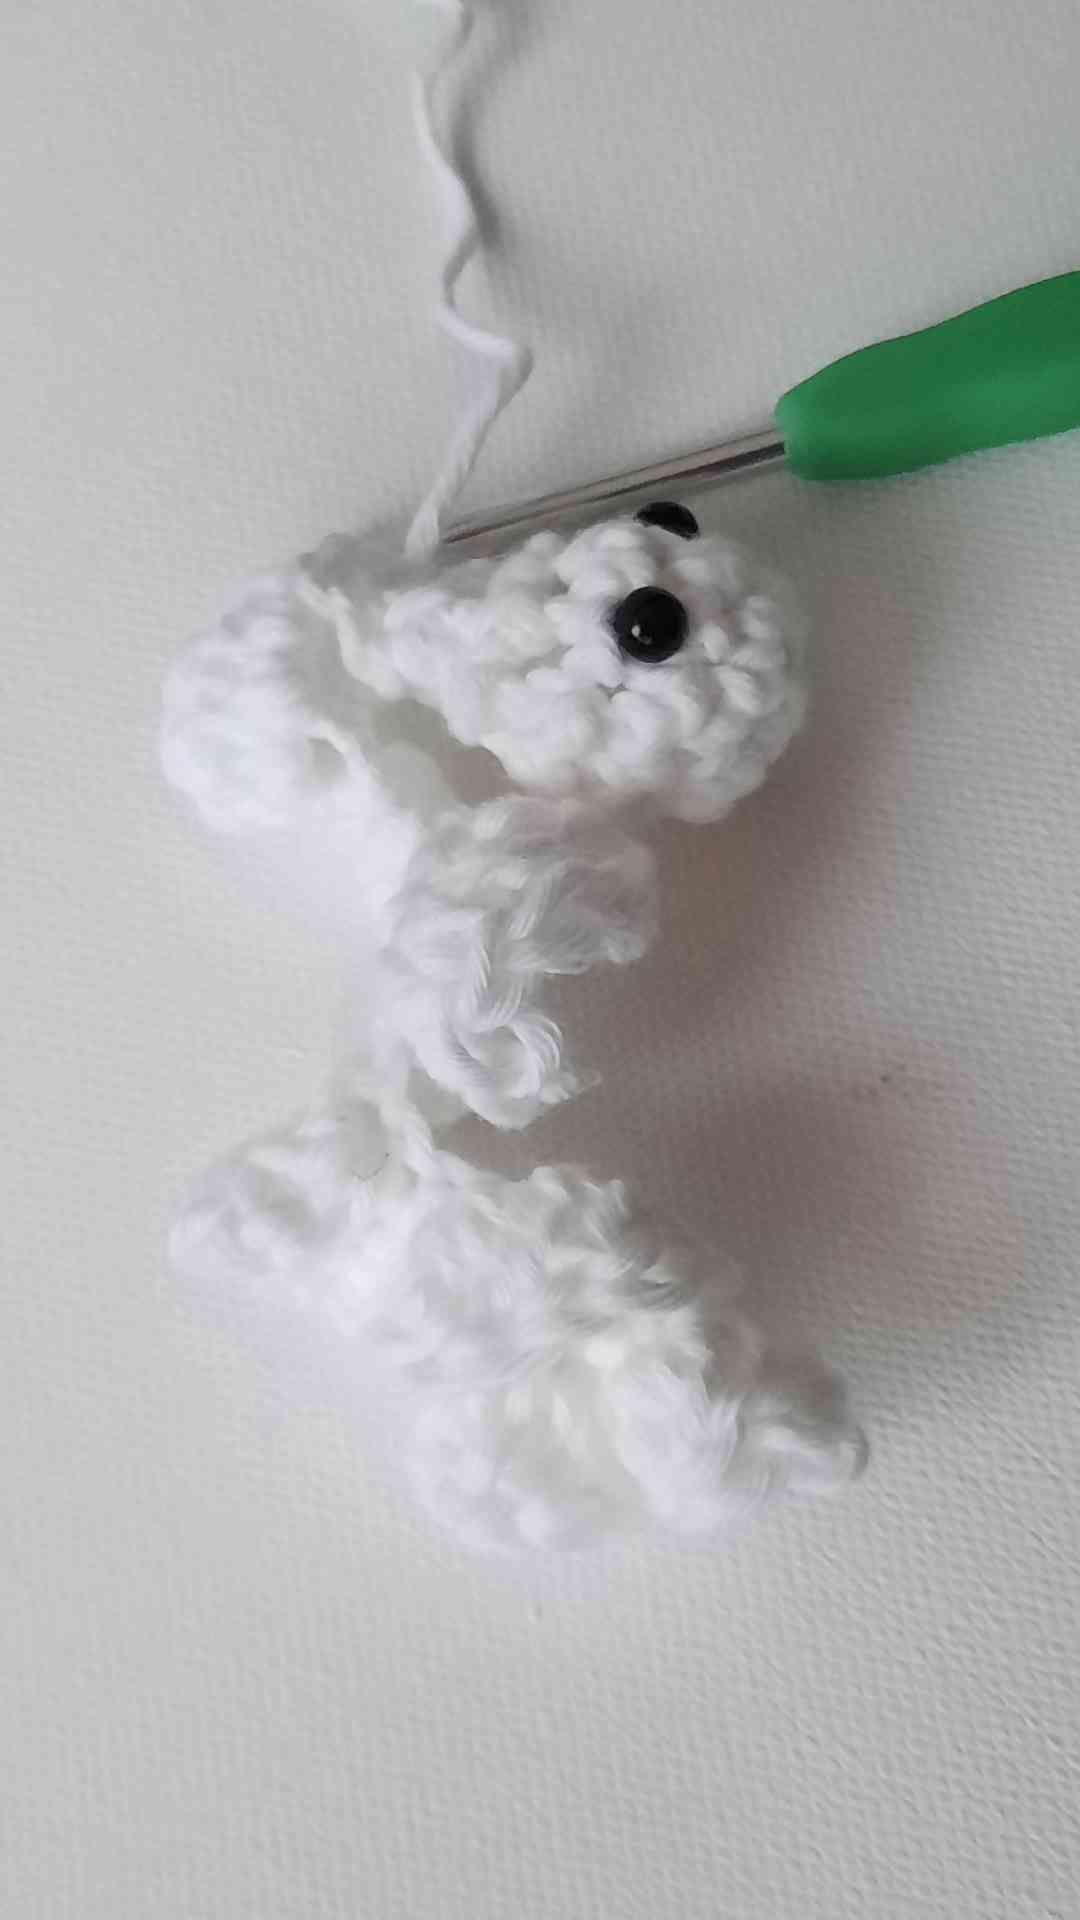 crochet snowman ornament